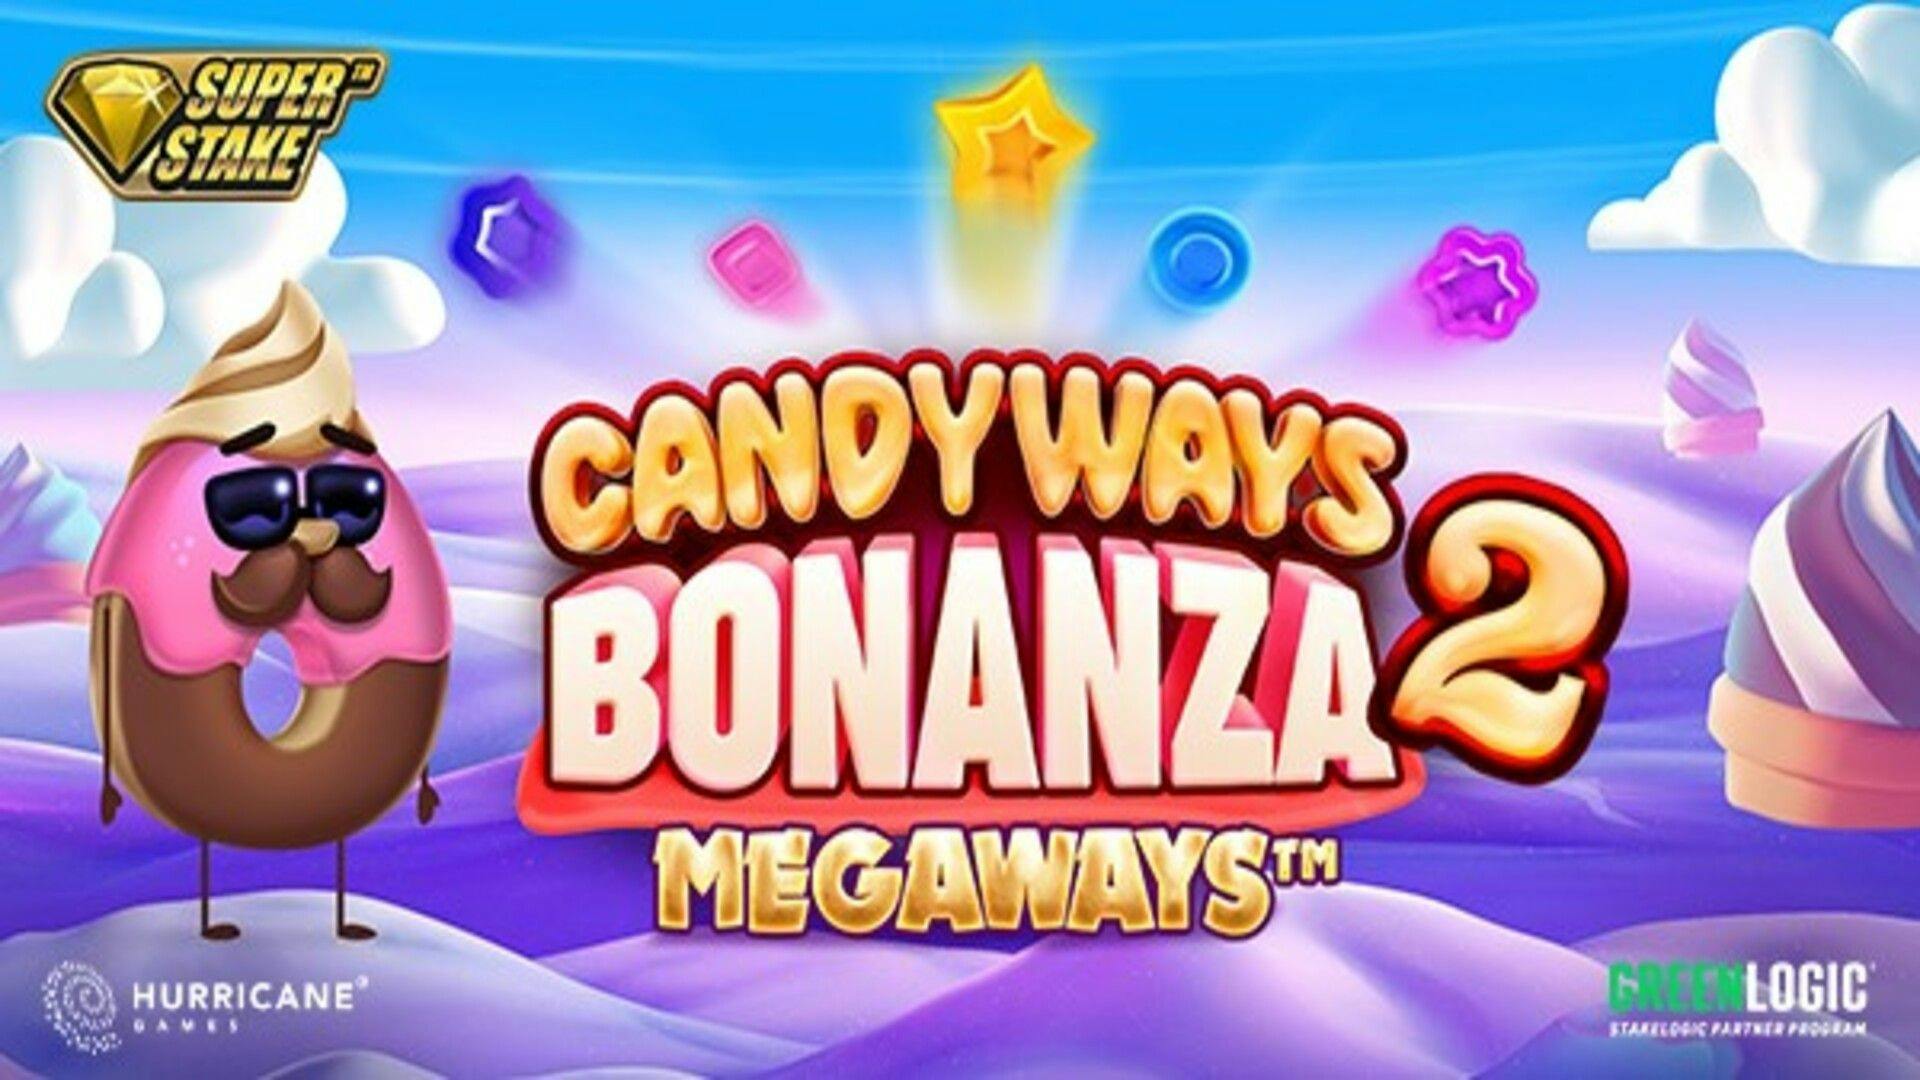 Candyways Bonanza Megaways 2 Slot Machine Online Free Game Play